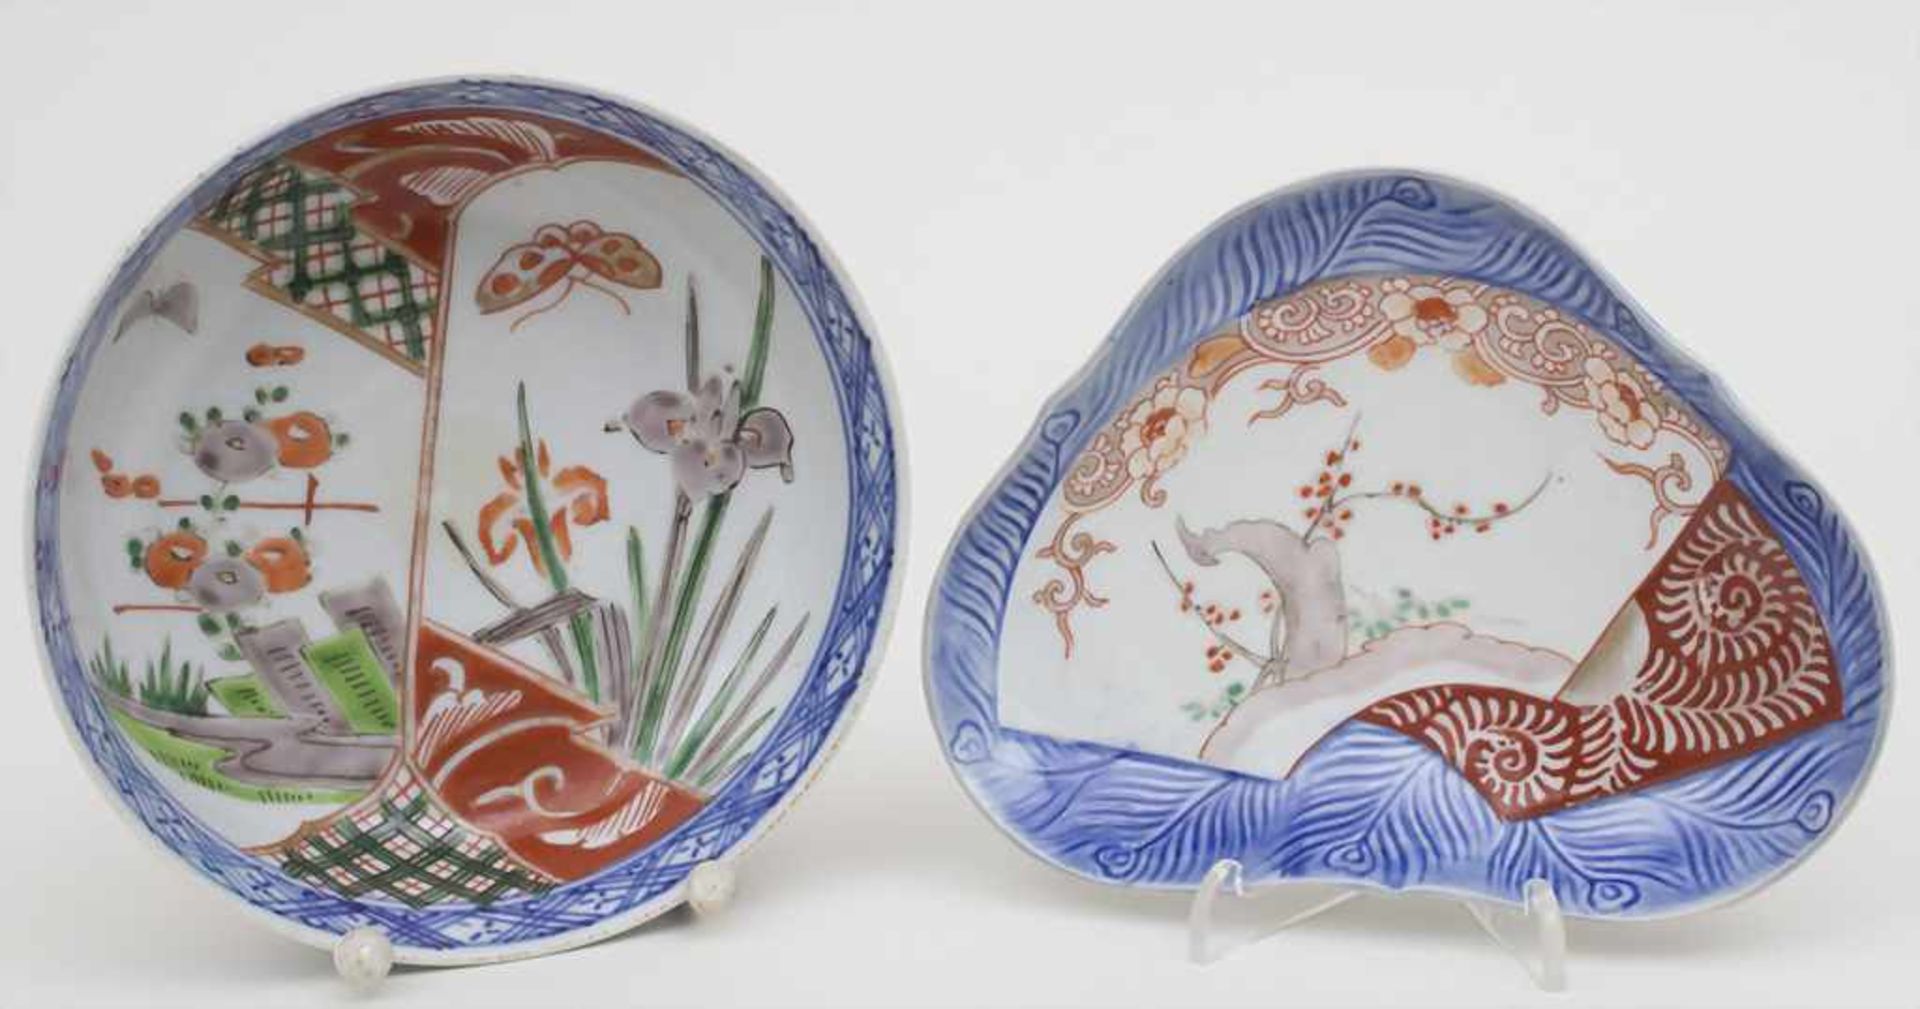 2 Imari-Schalen / Two Imari bowls, Japan, 18./19. Jh.Material: Porzellan, mit Emailfarben bemalt,